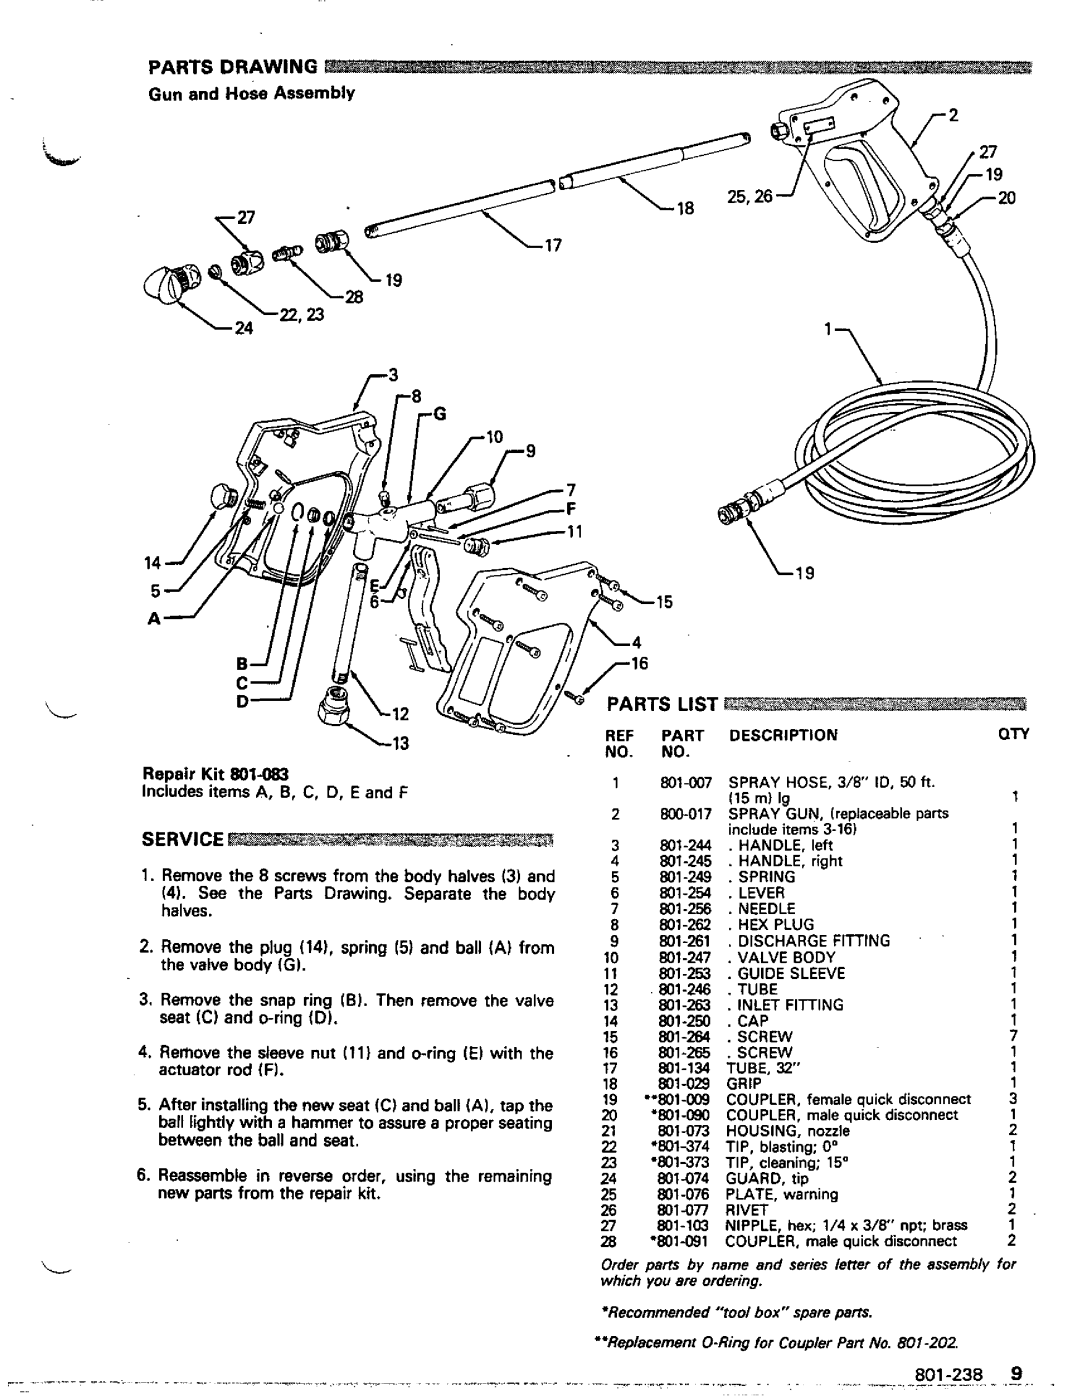 Graco Inc 800-051, 1204E manual Parts Drawing, Service, 801-2389, Cap, Gun andHose Assembly, 800-017, itrv 